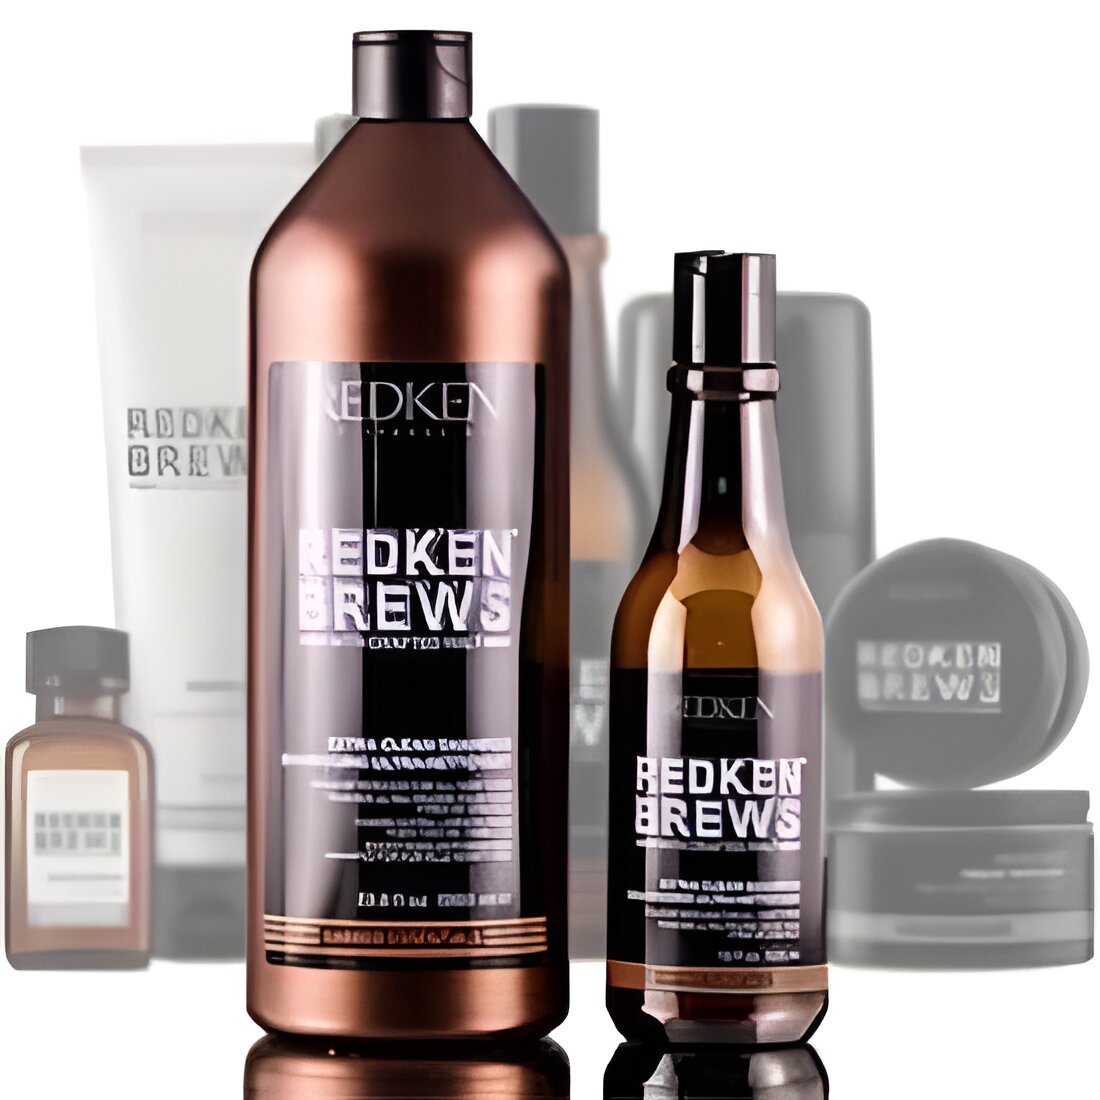 Free Redken Brews Extra Clean Shampoo